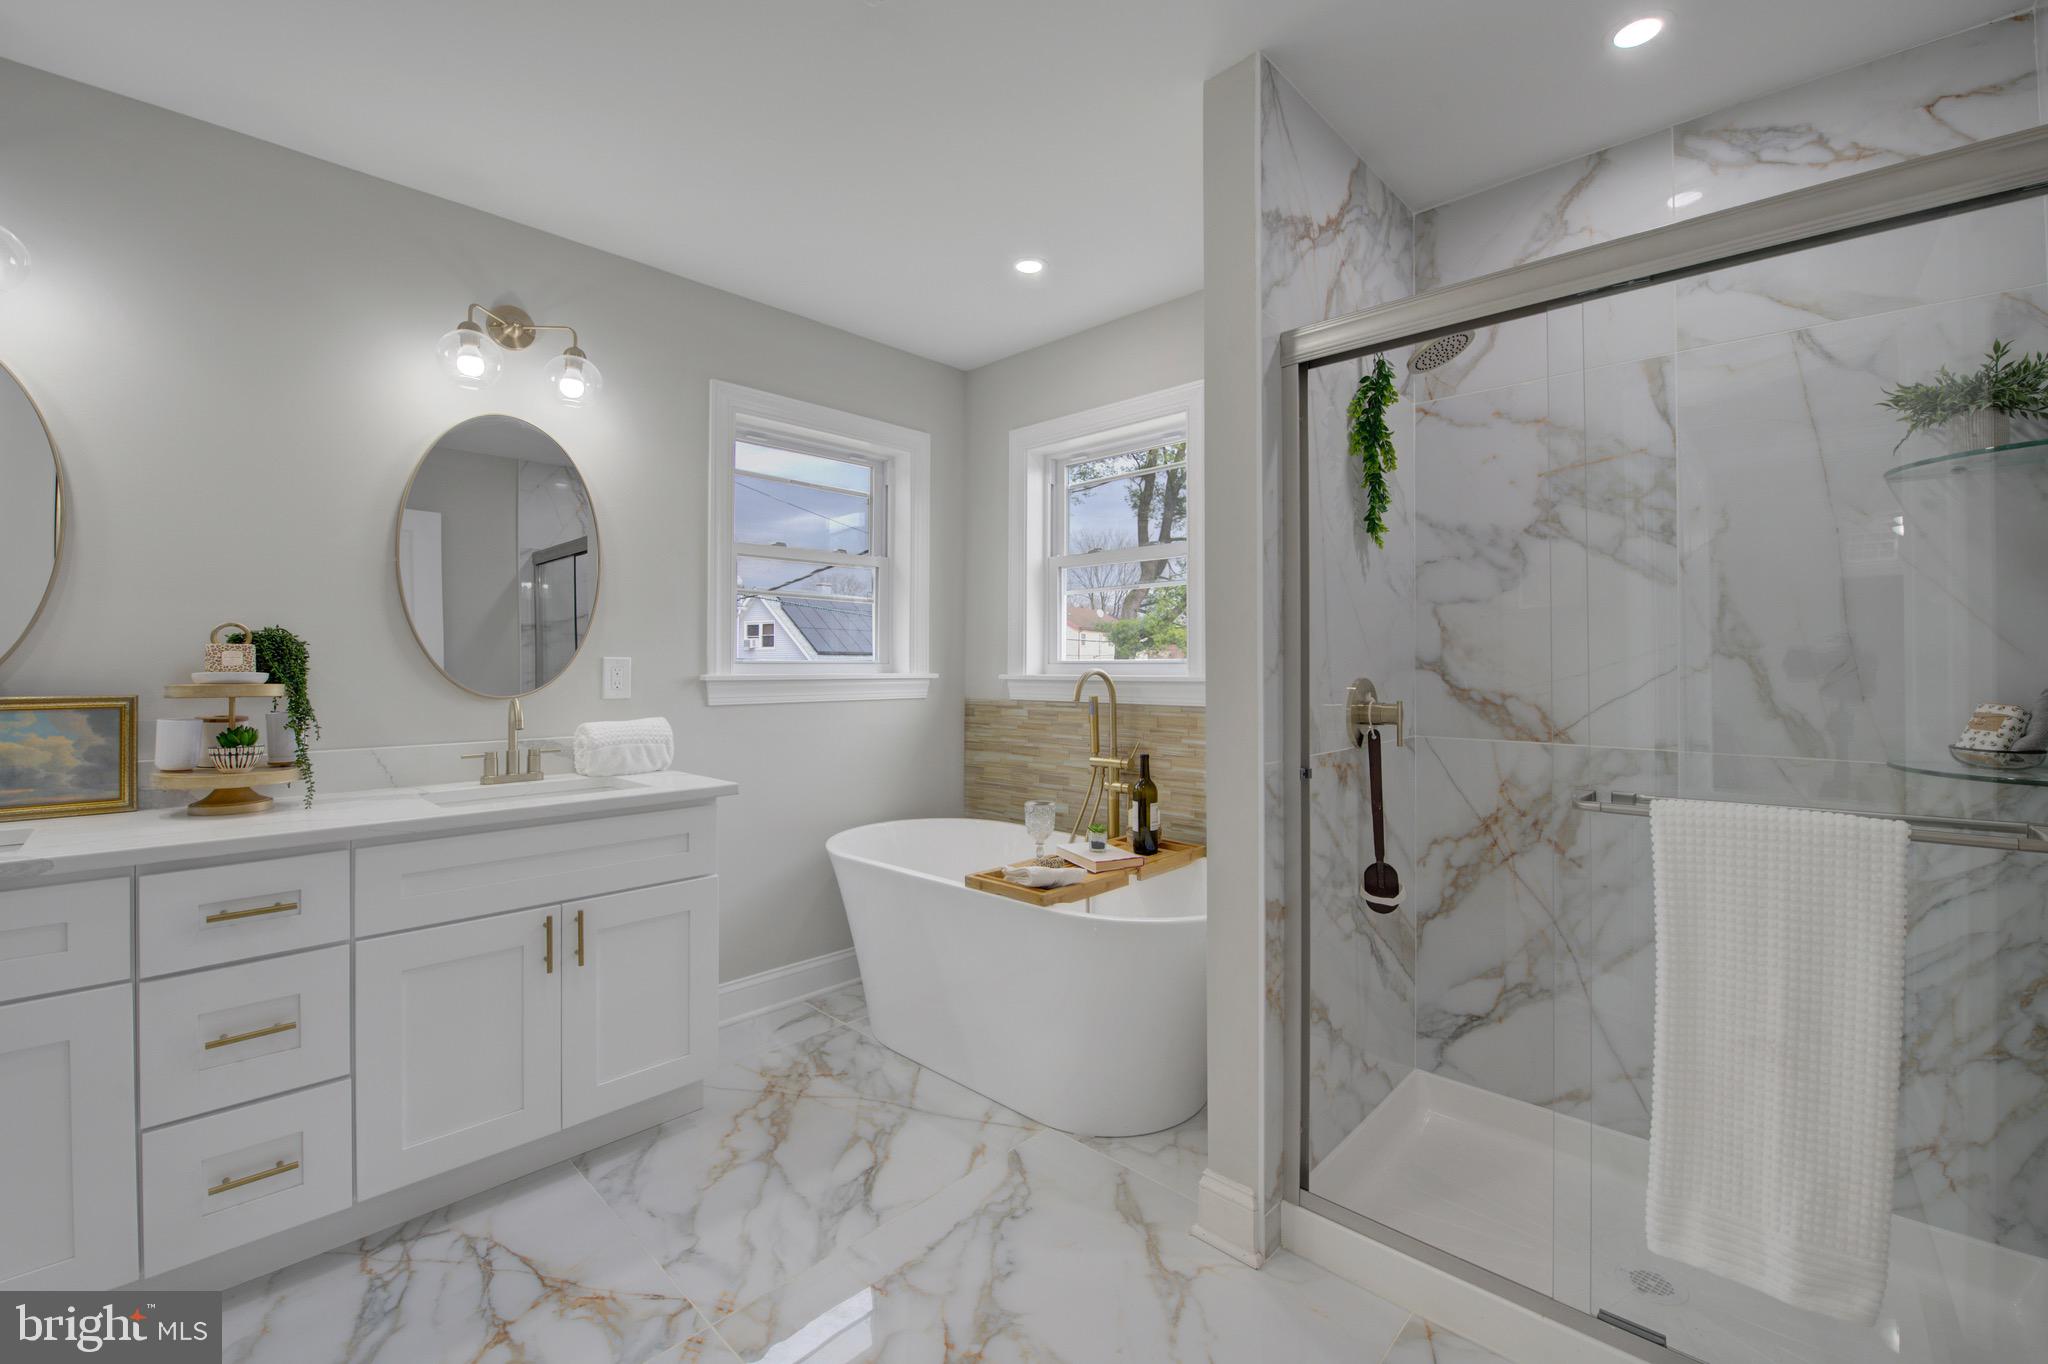 a spacious bathroom with a double vanity sink mirror and bathtub